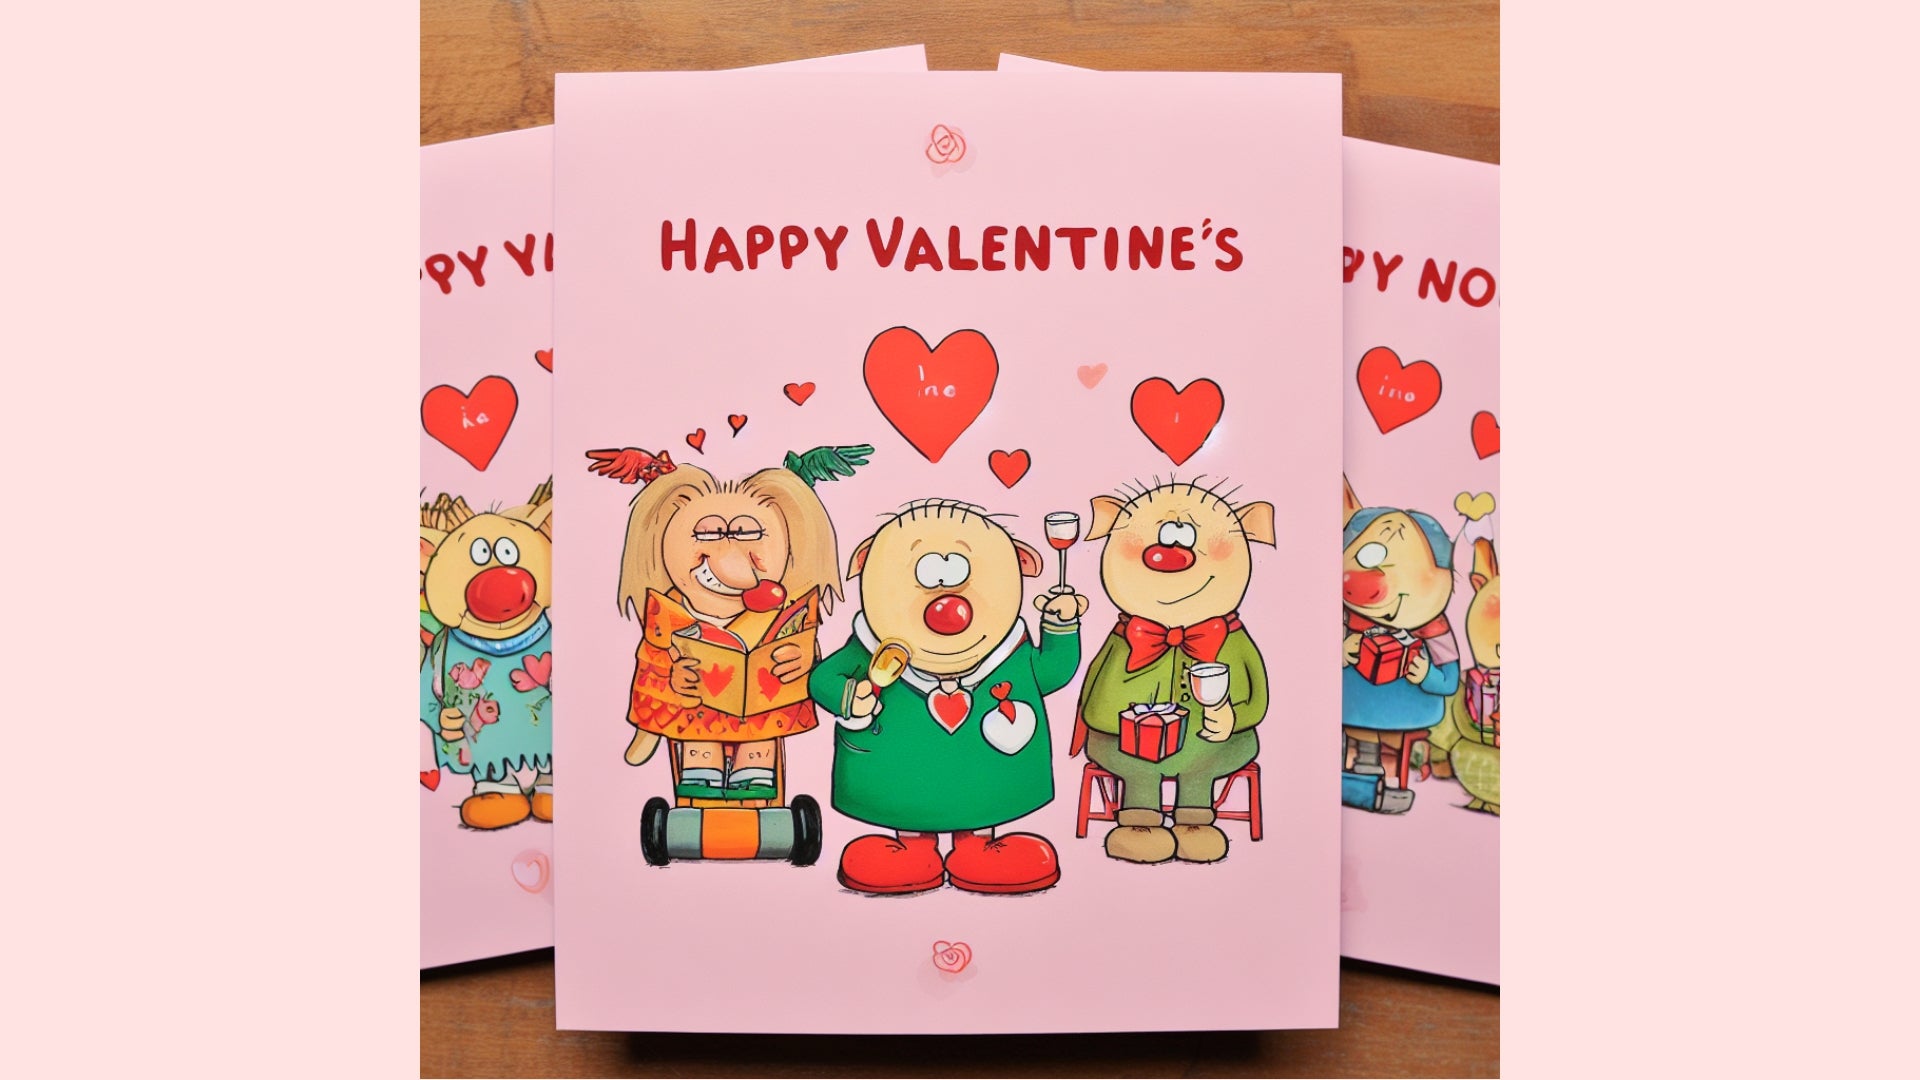 Funny valentine's cards ireland